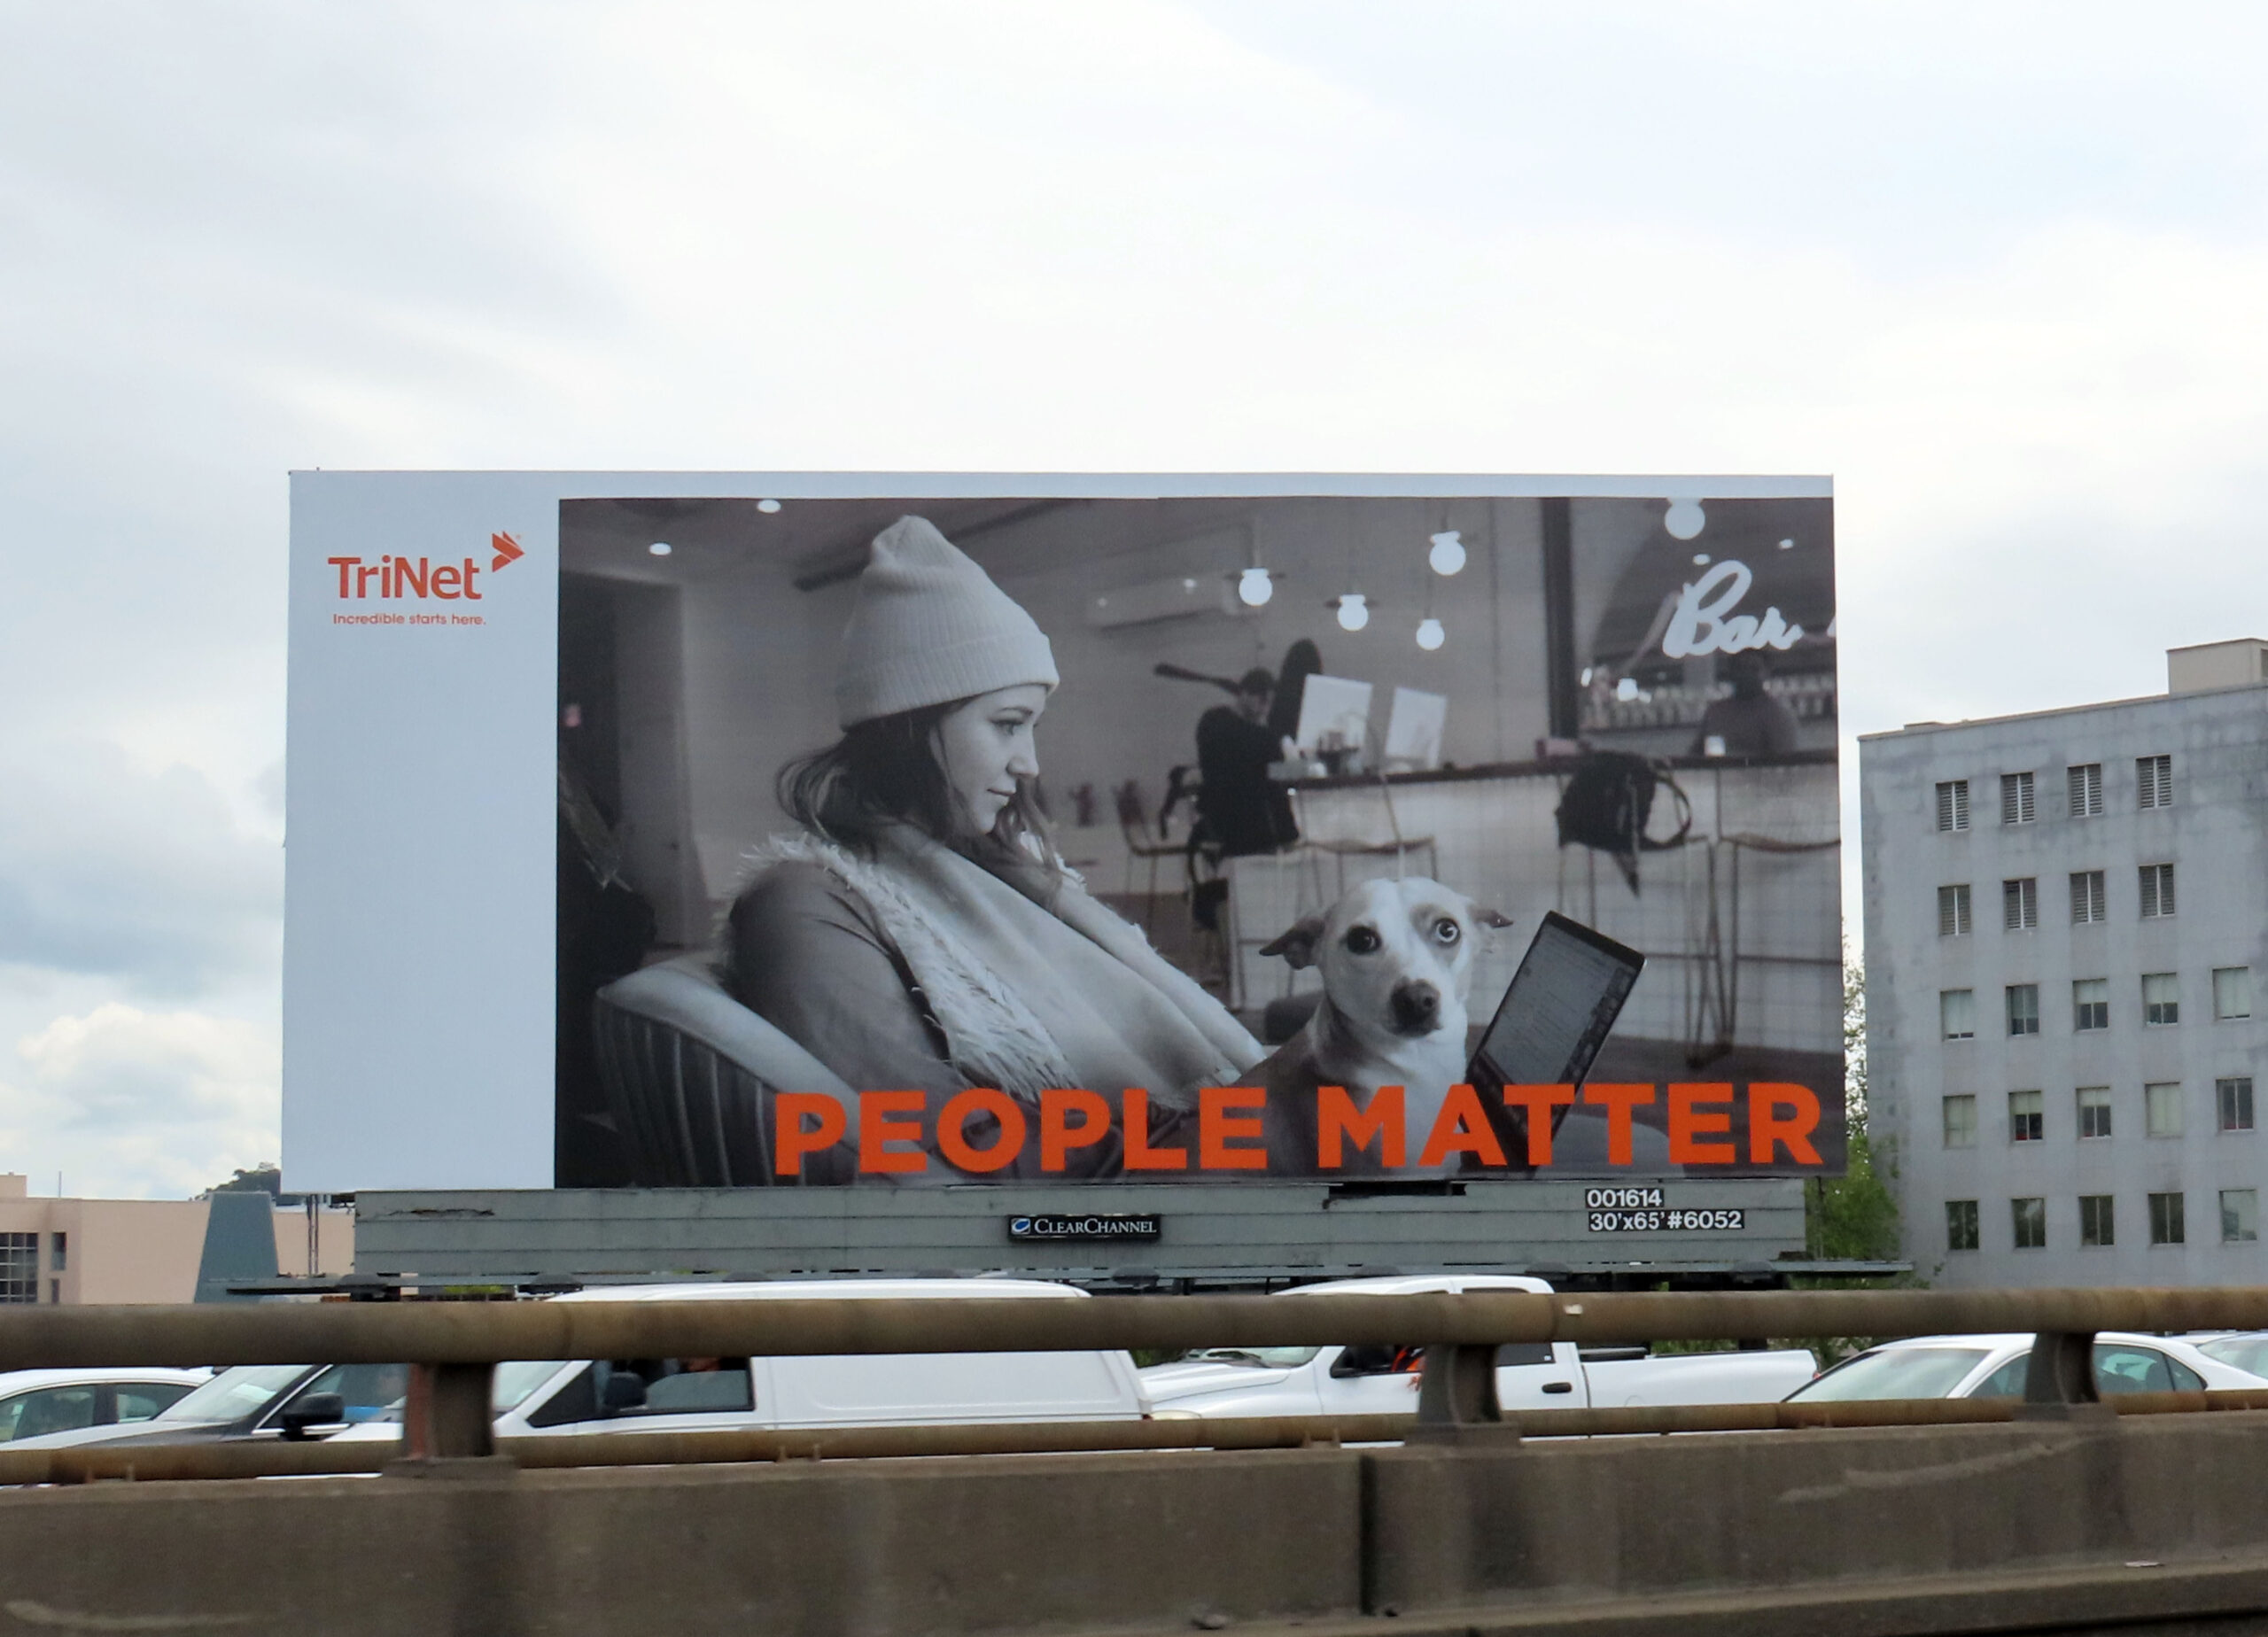 TriNet 'People Matter'